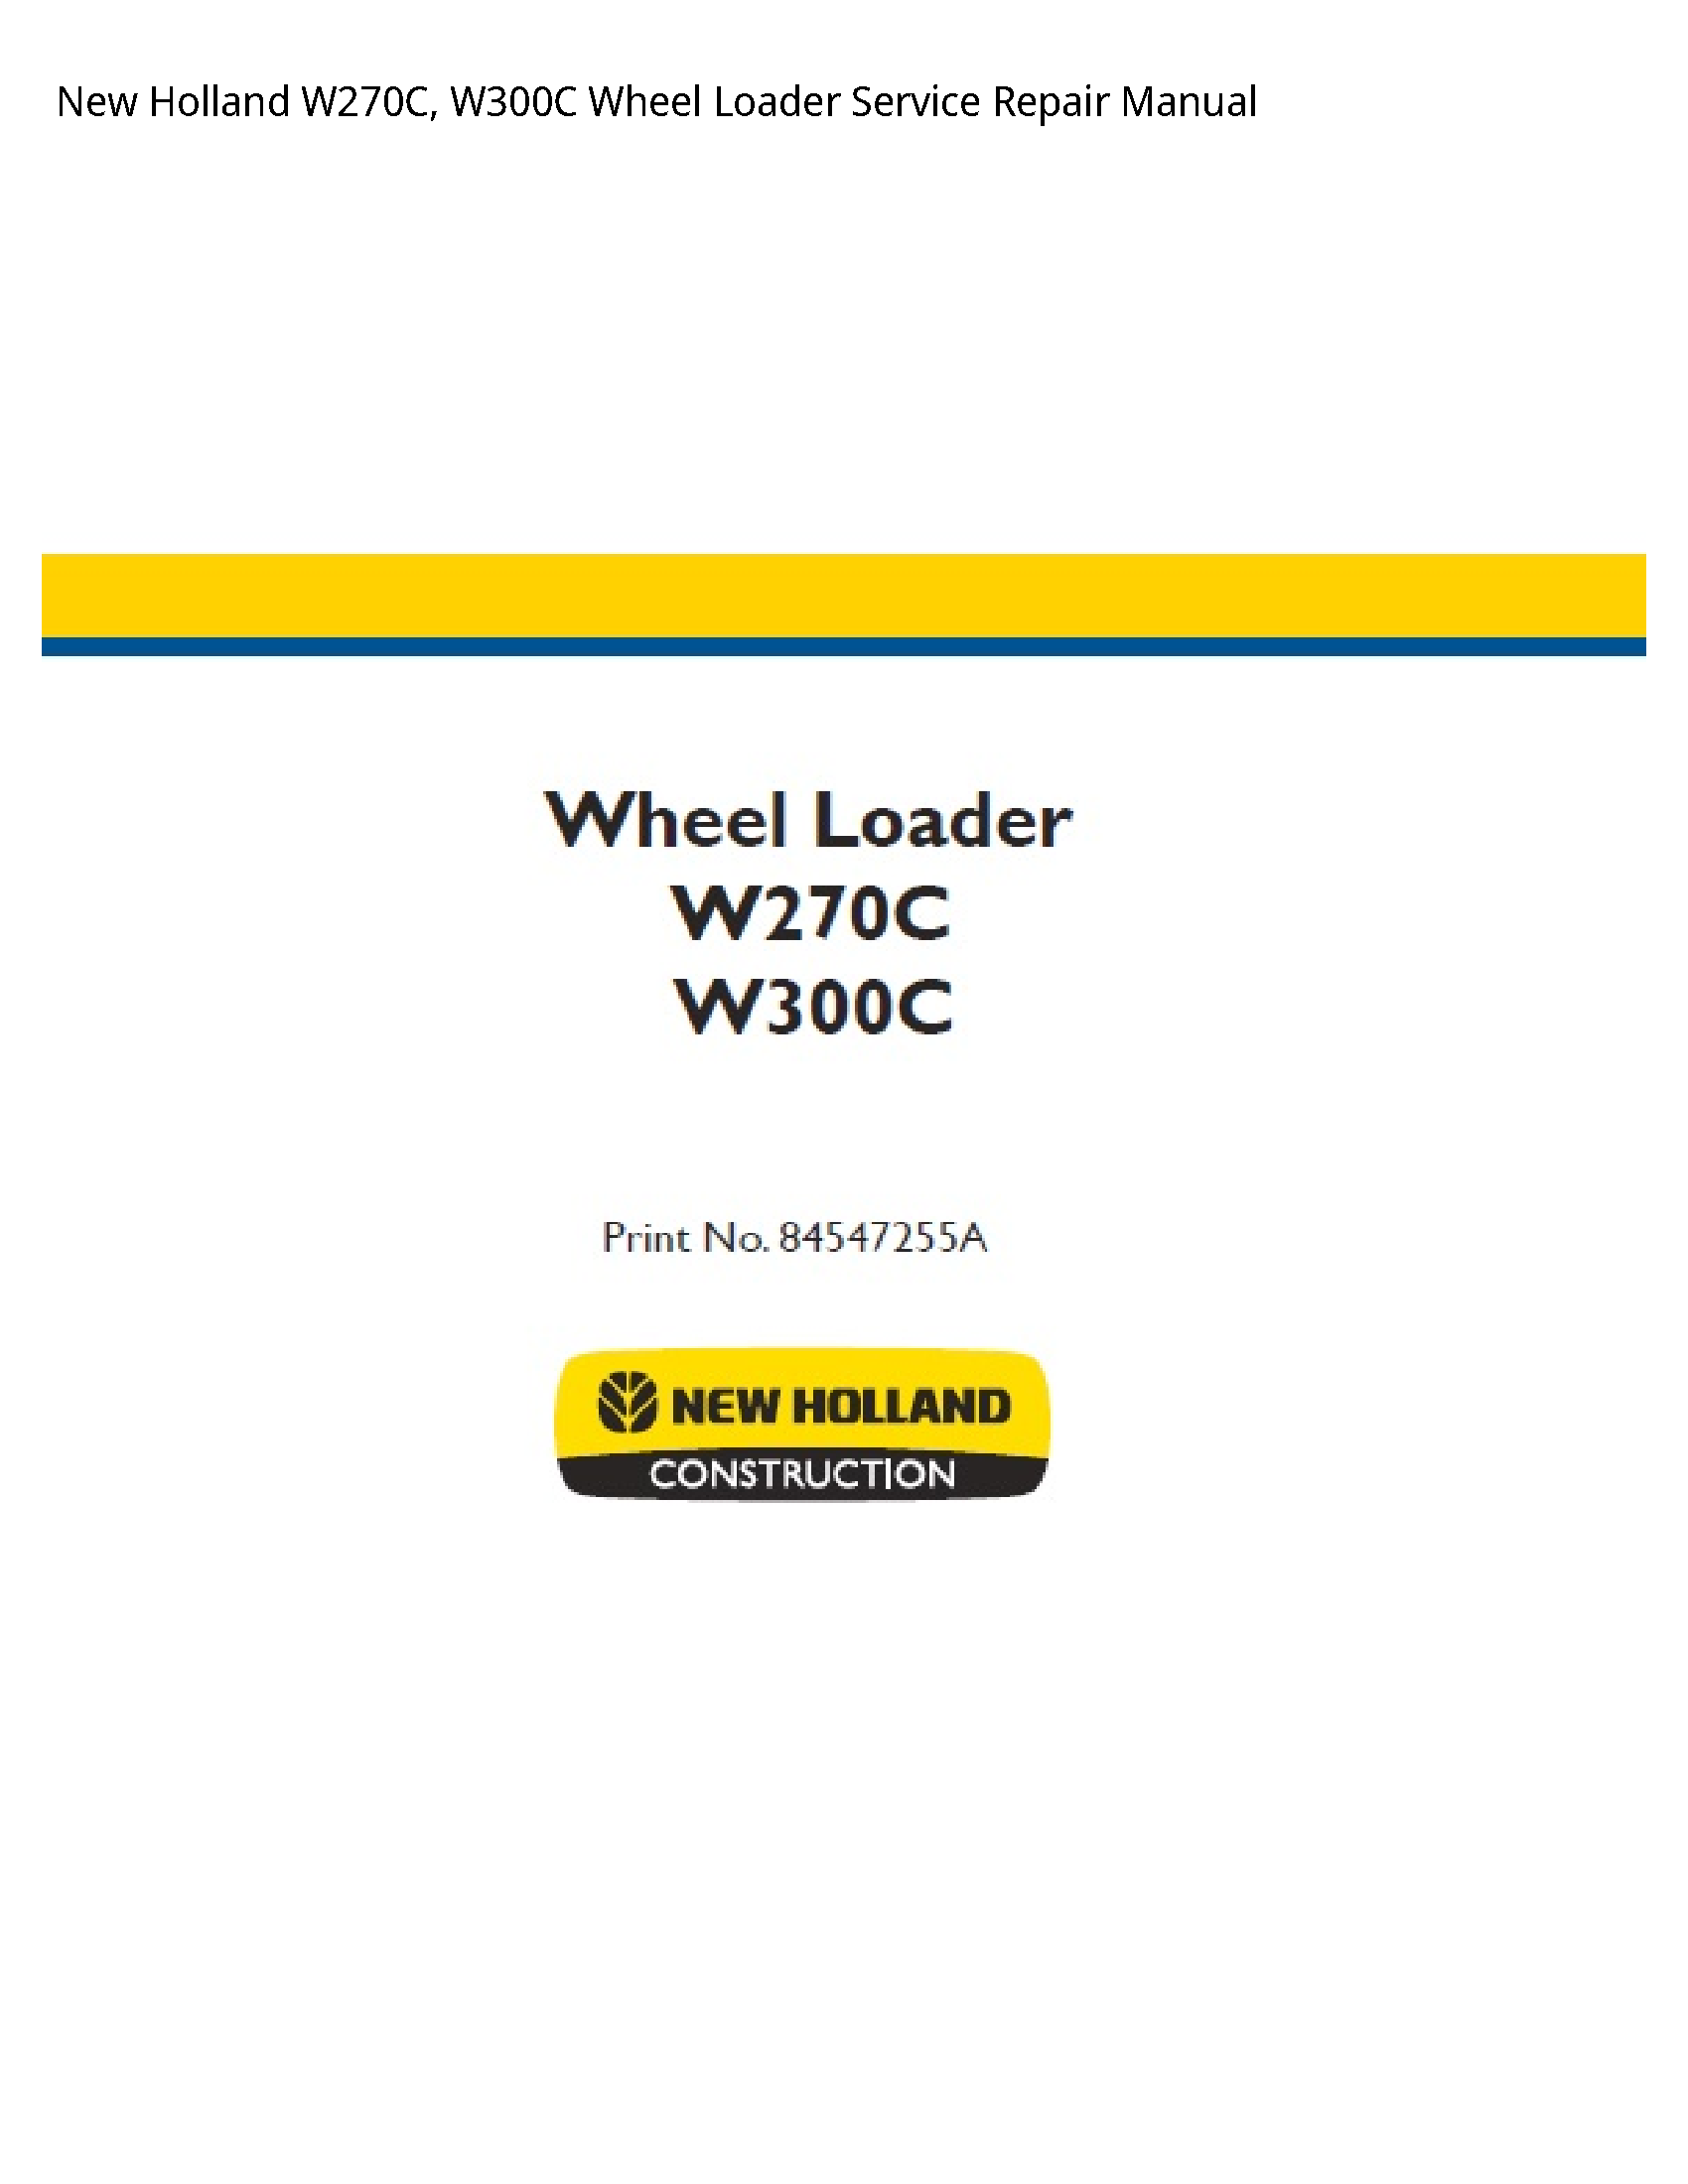 New Holland W270C Wheel Loader manual